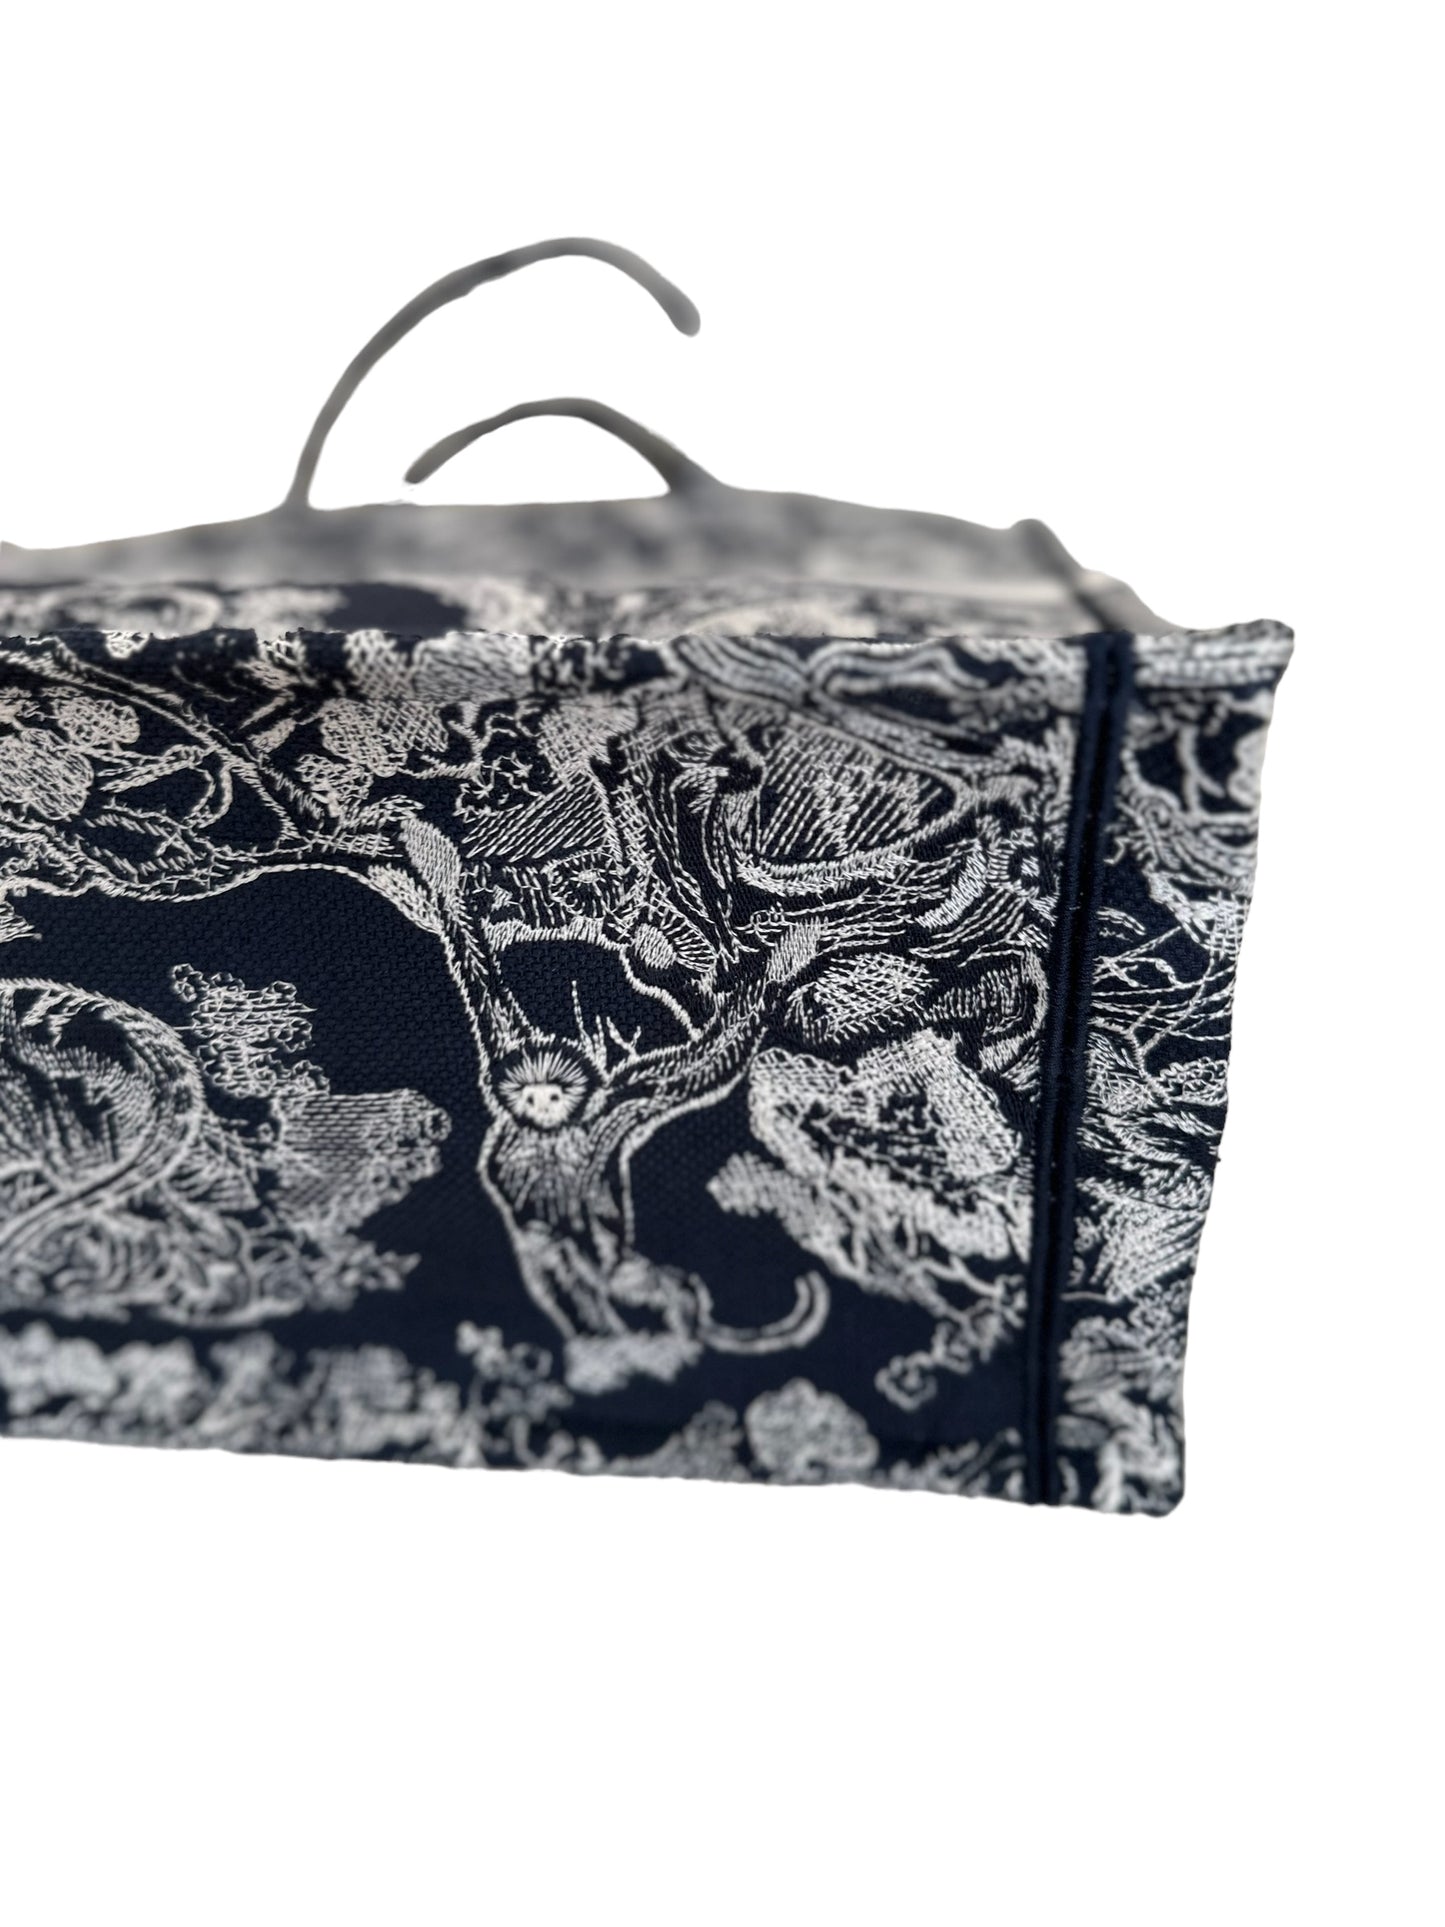 Christian Dior large toile jungle book bag